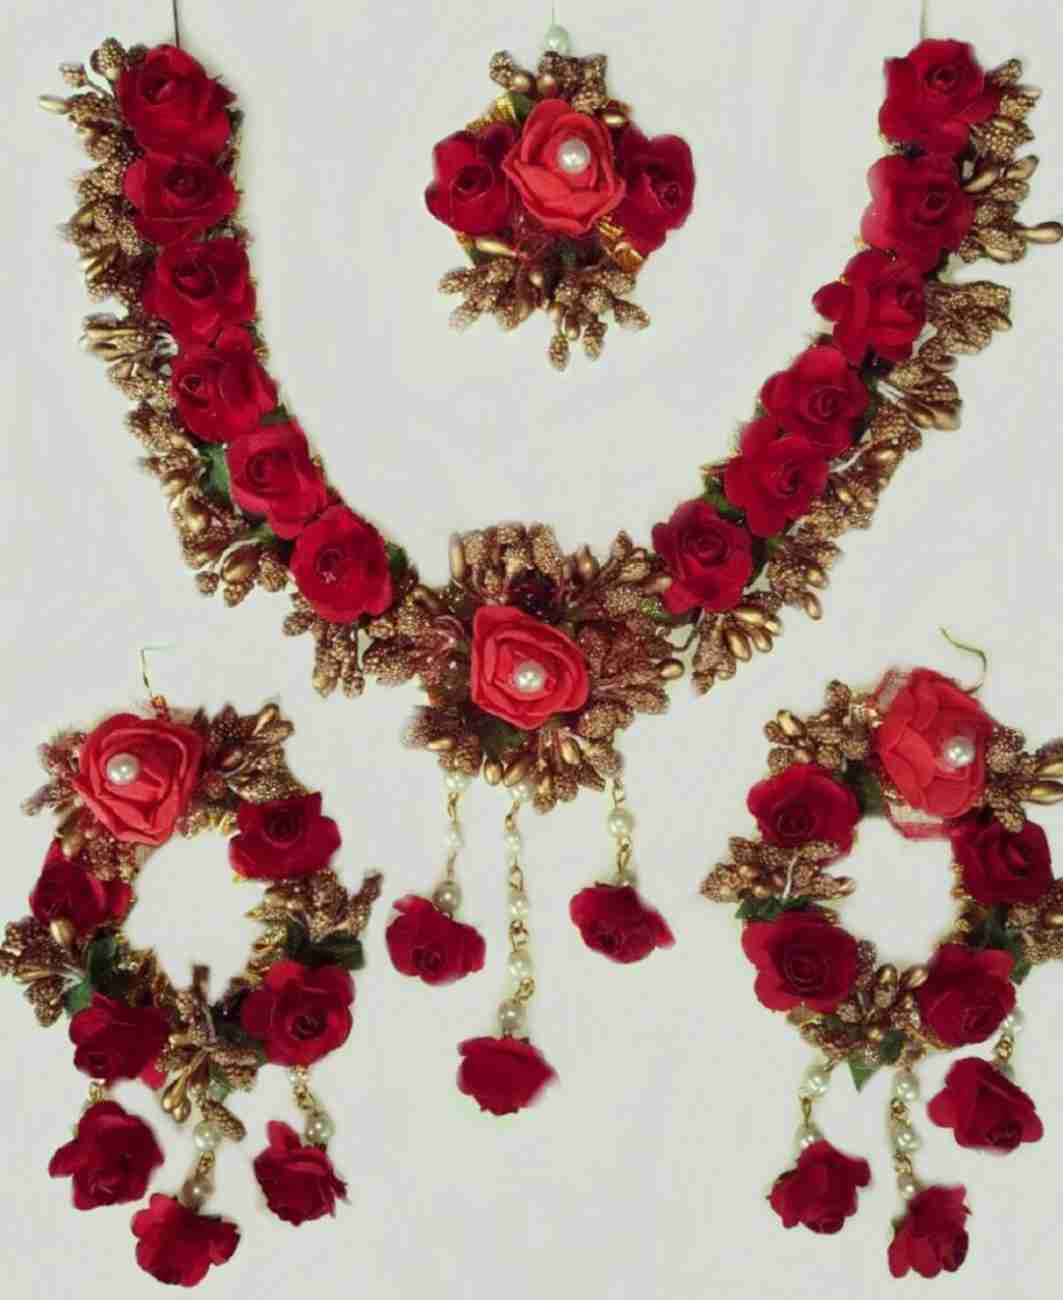 Lamansh Necklace, Earrings & Maangtika set 1 Necklace, 2 Earrings,1 Maangtika set / Red-Gold LAMANSH® Designer Floral Jewellery Set for Women & Girls / Haldi Set